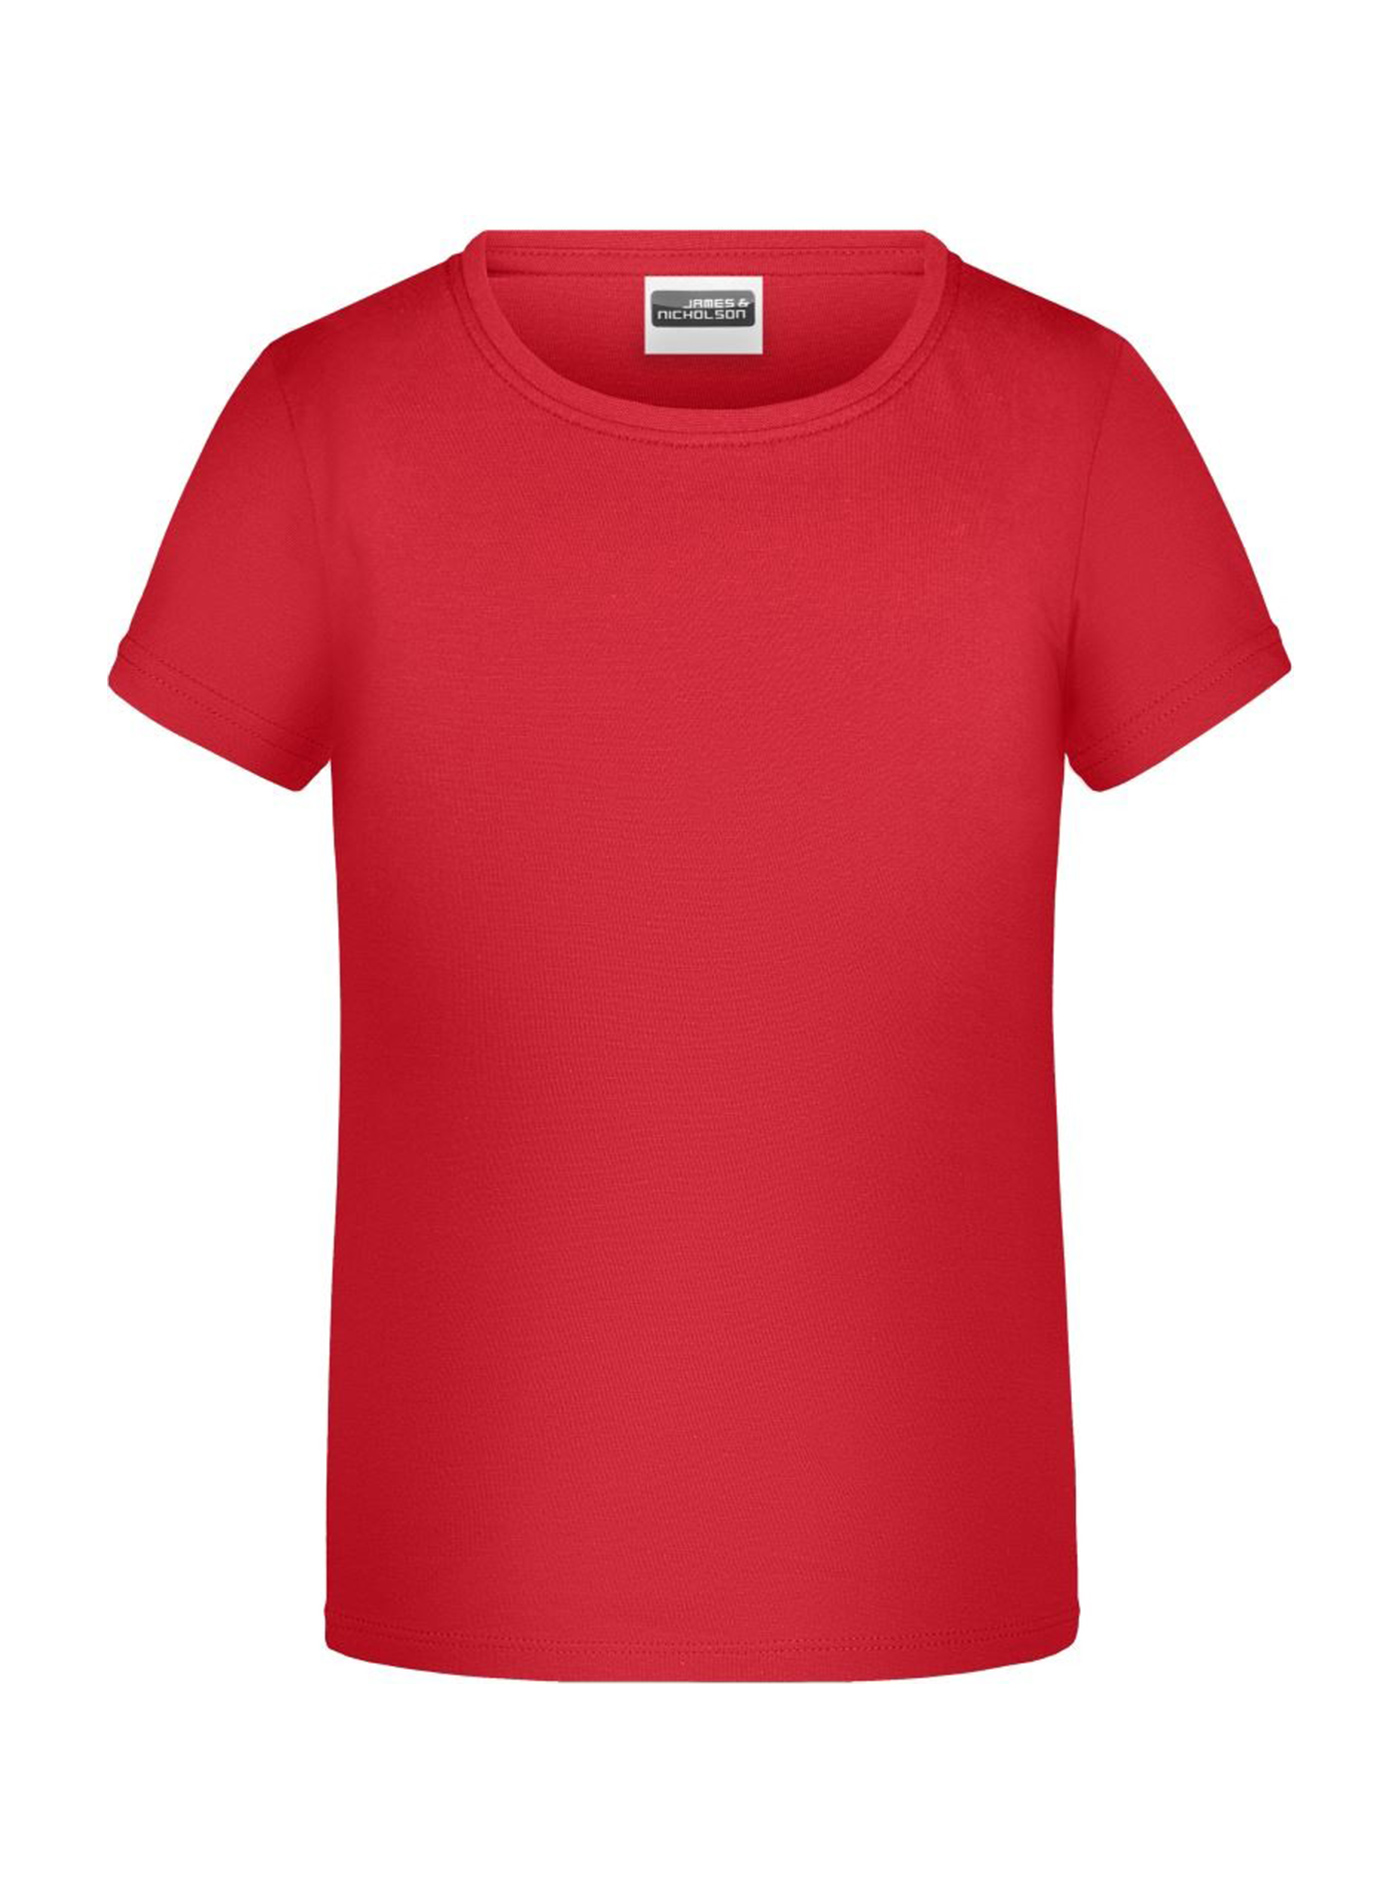 Dívčí tričko James & Nicholson - Červená XL